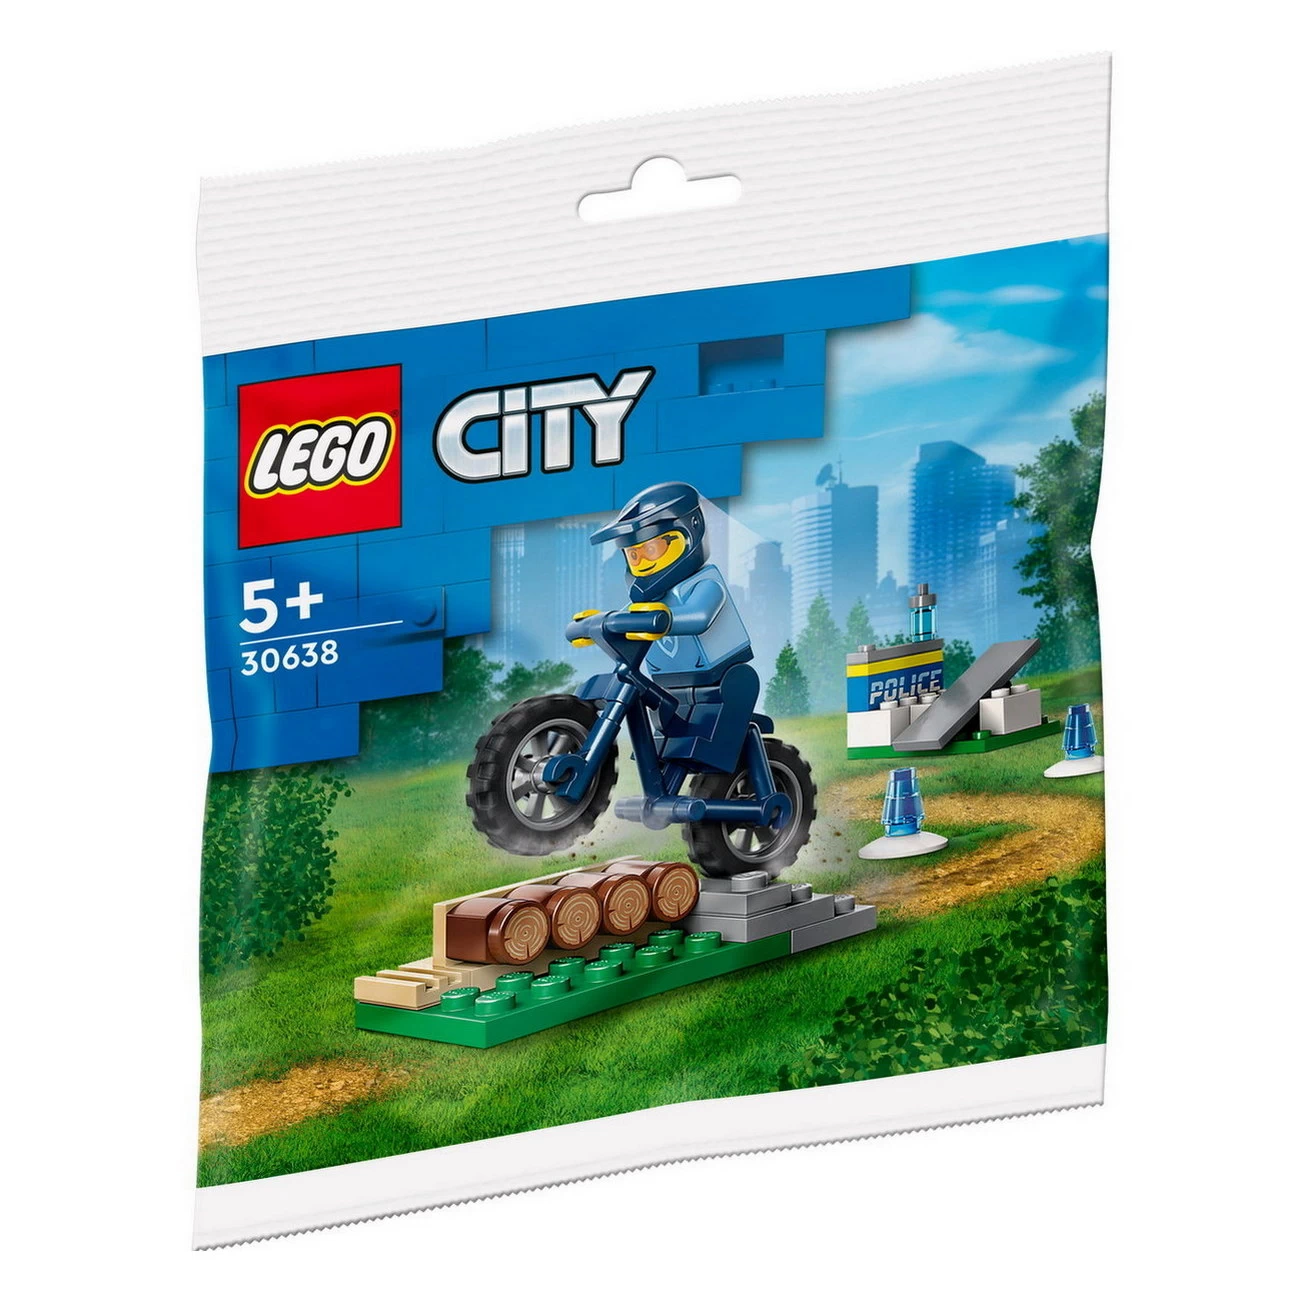 LEGO City 30638 - Fahrradtraining der Polizei - Polybag